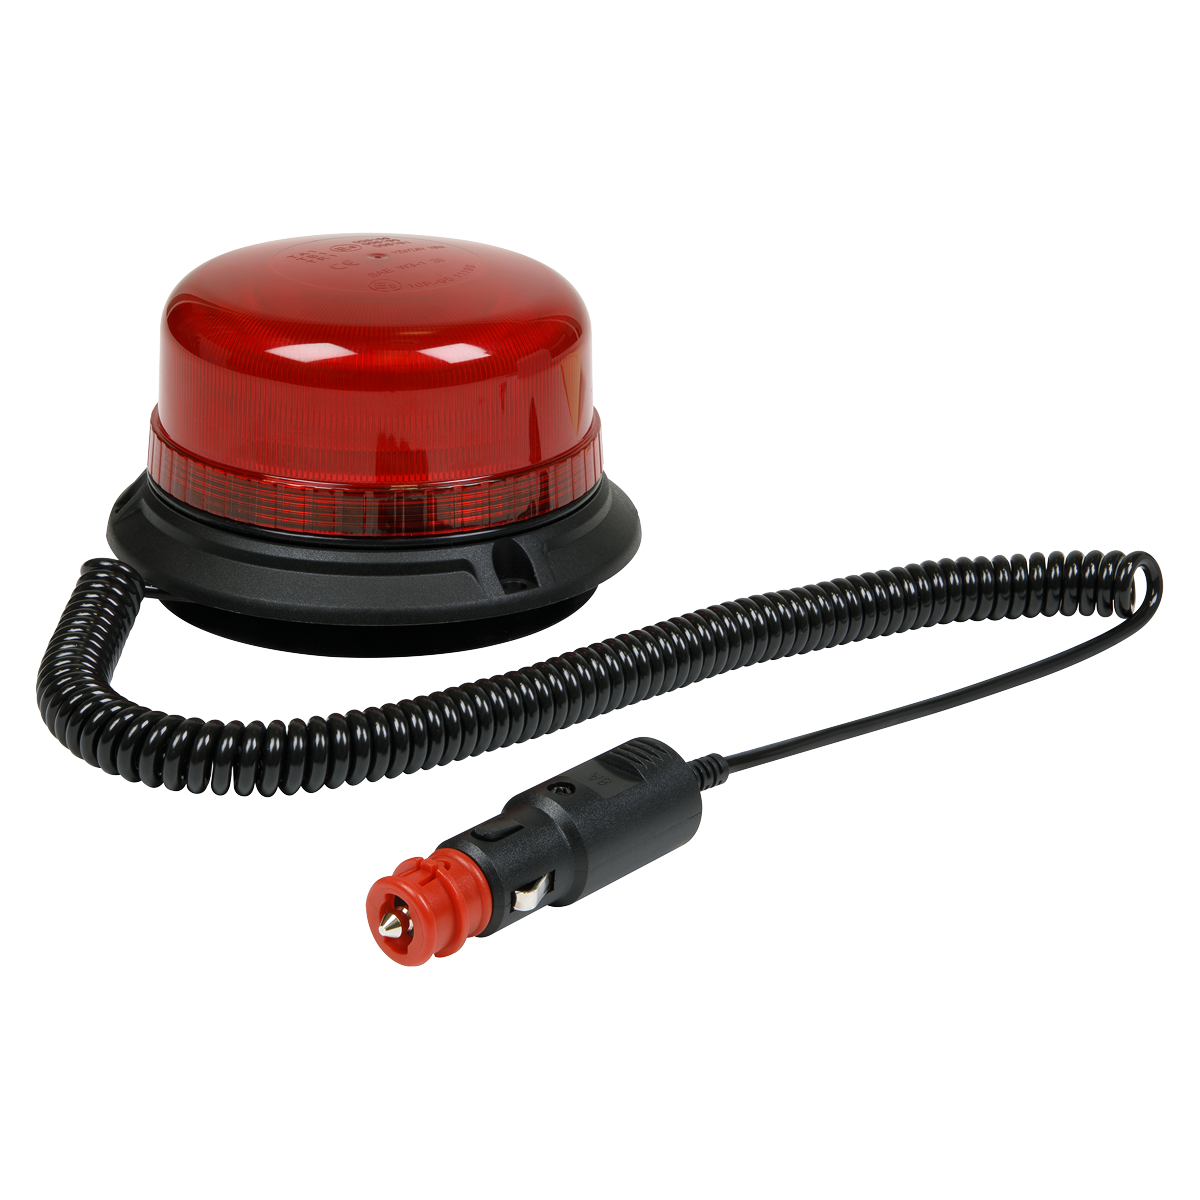 Warning Beacon SMD LED 12/24V Magnetic Fixing - Red - WB954LEDR - Farming Parts